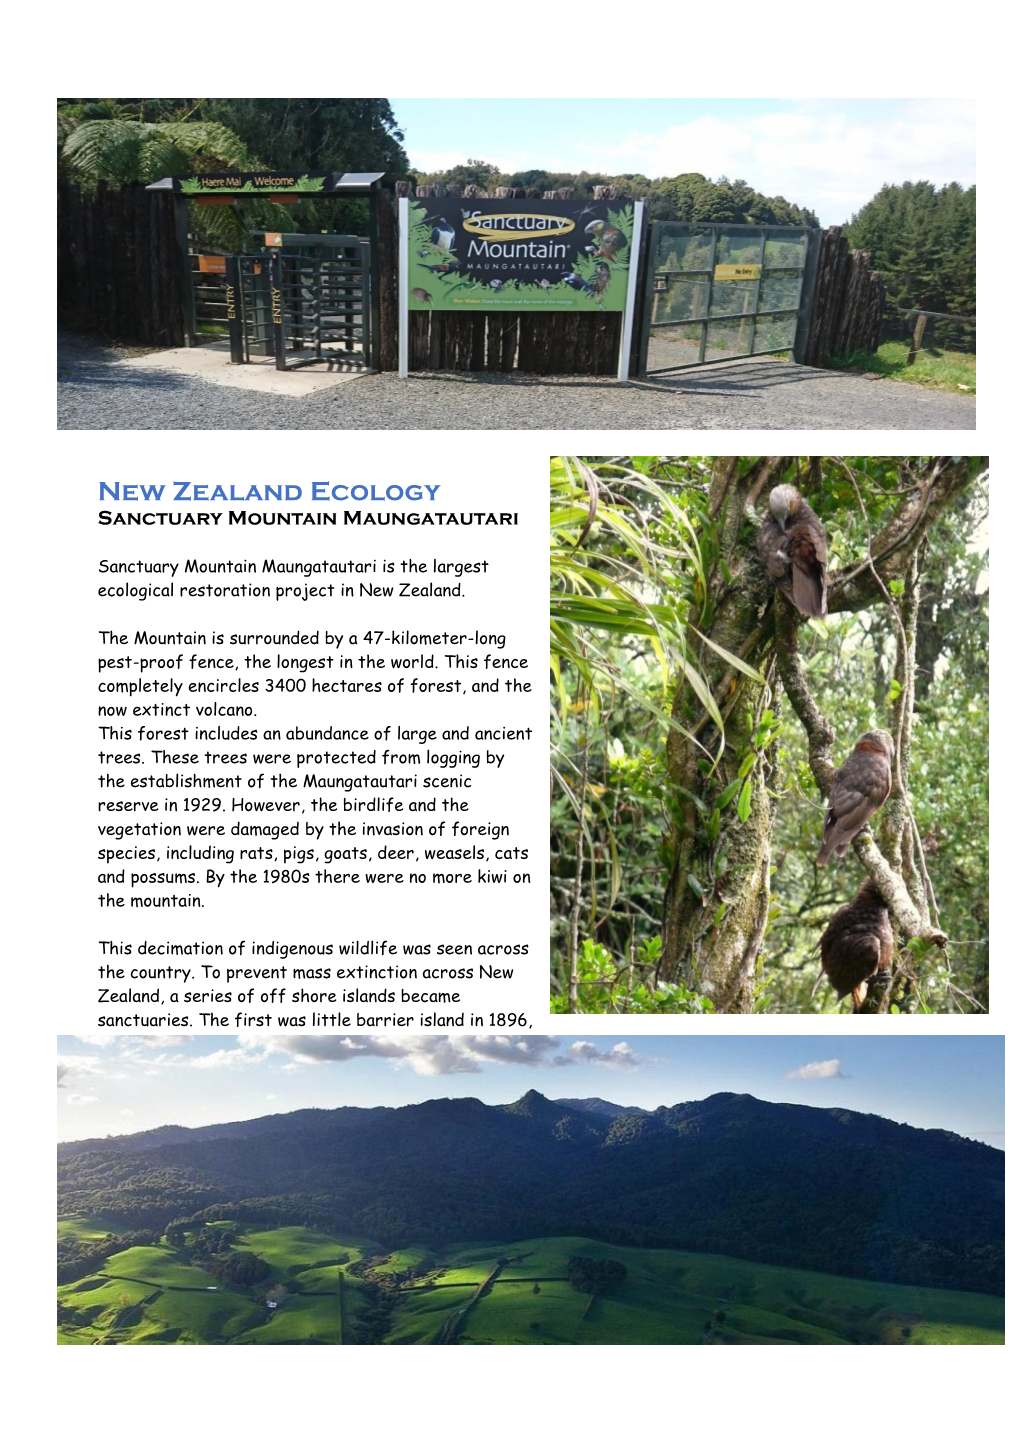 New Zealand Ecology Sanctuary Mountain Maungatautari